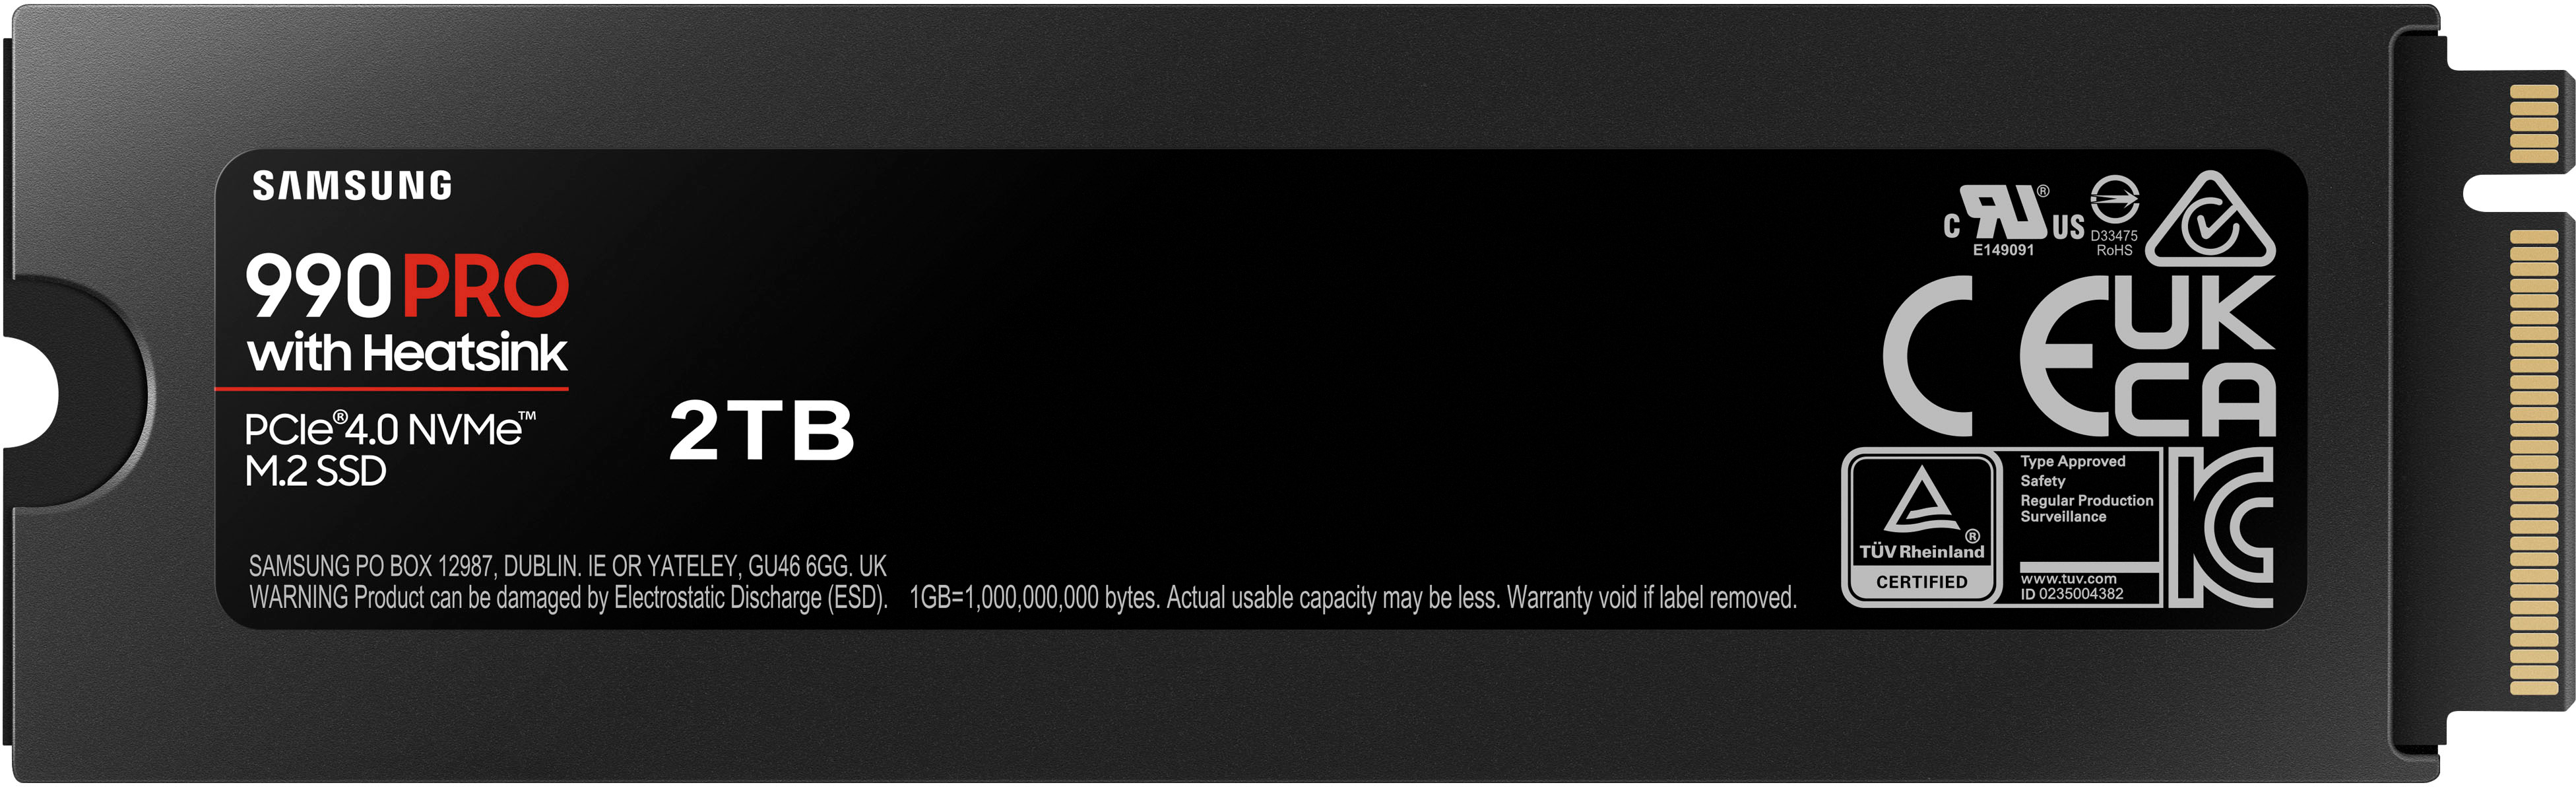 Samsung 990 Pro SSD Review - Niche Gamer